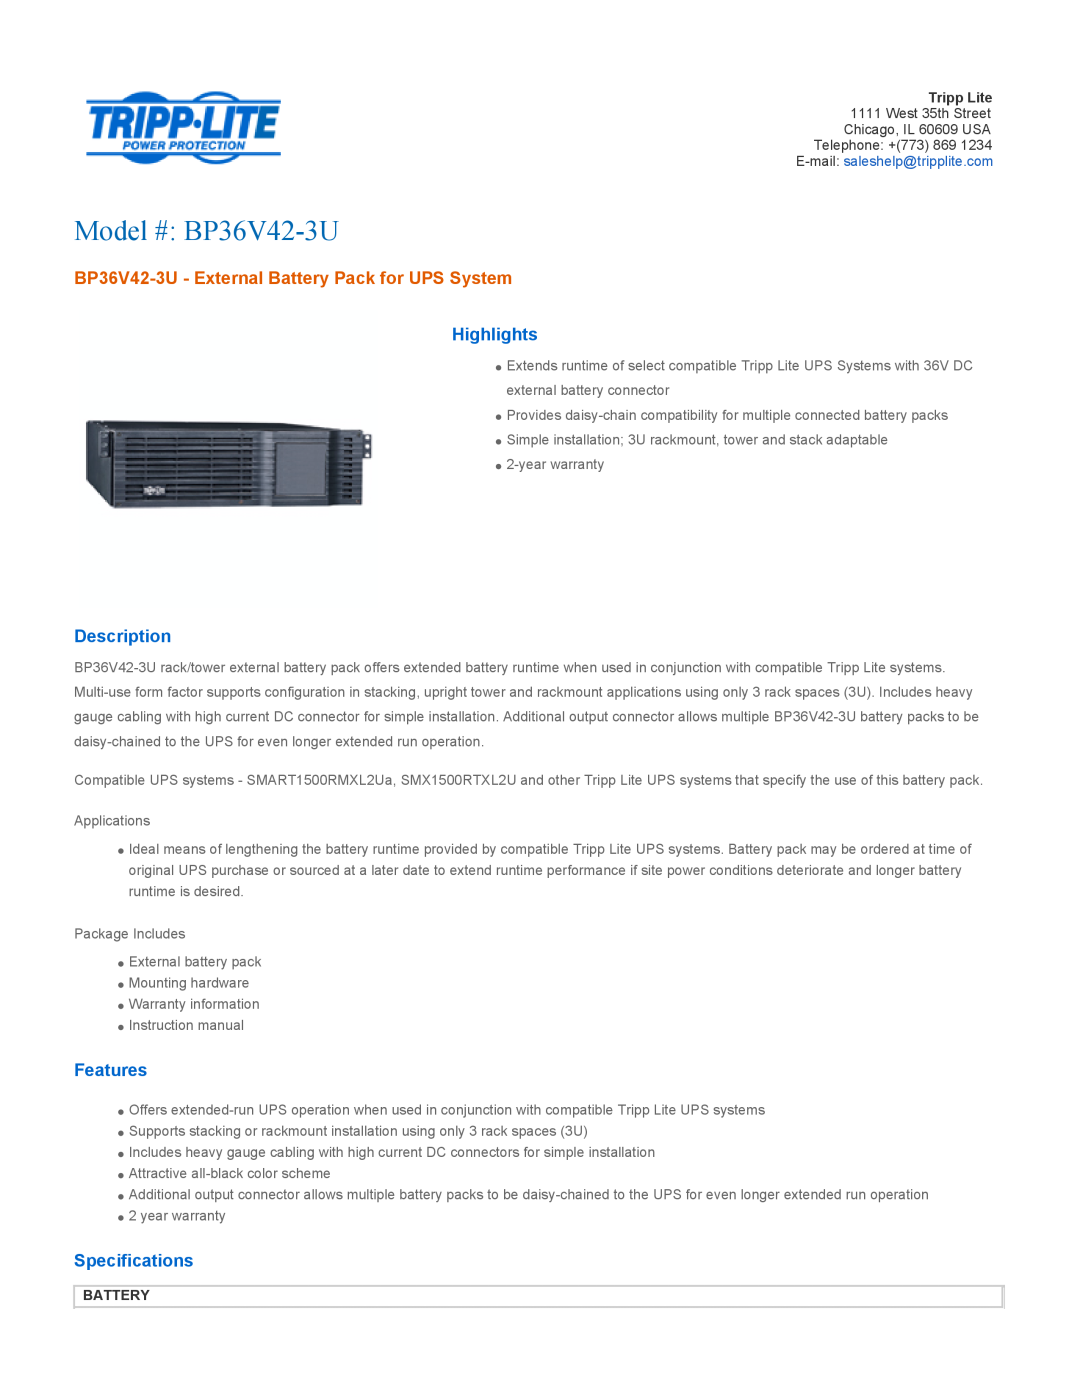 Tripp Lite specifications Highlights, Description, Features, Specifications, Battery, Model # BP36V42-3U 